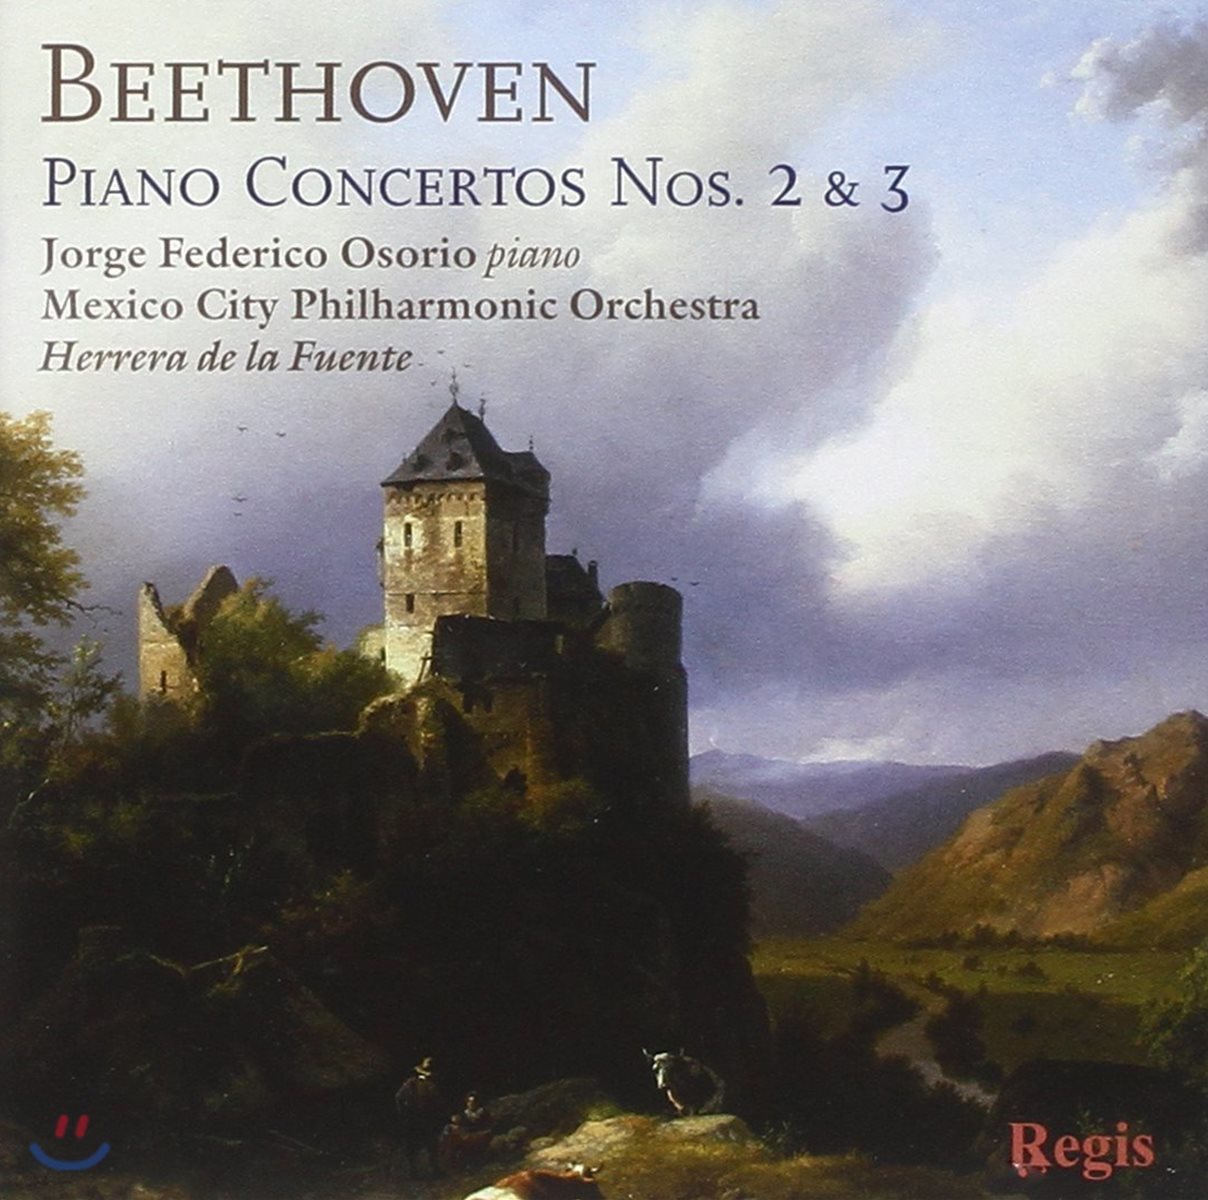 Jorge Federico Osorio 베토벤: 피아노 협주곡 2번, 3번 - 호르헤 페데리코 오소리오, 멕시코 시티 필하모닉, 헤레라 데 라 푸엔테 (Beethoven: Piano Concertos Op.19 & Op.37)